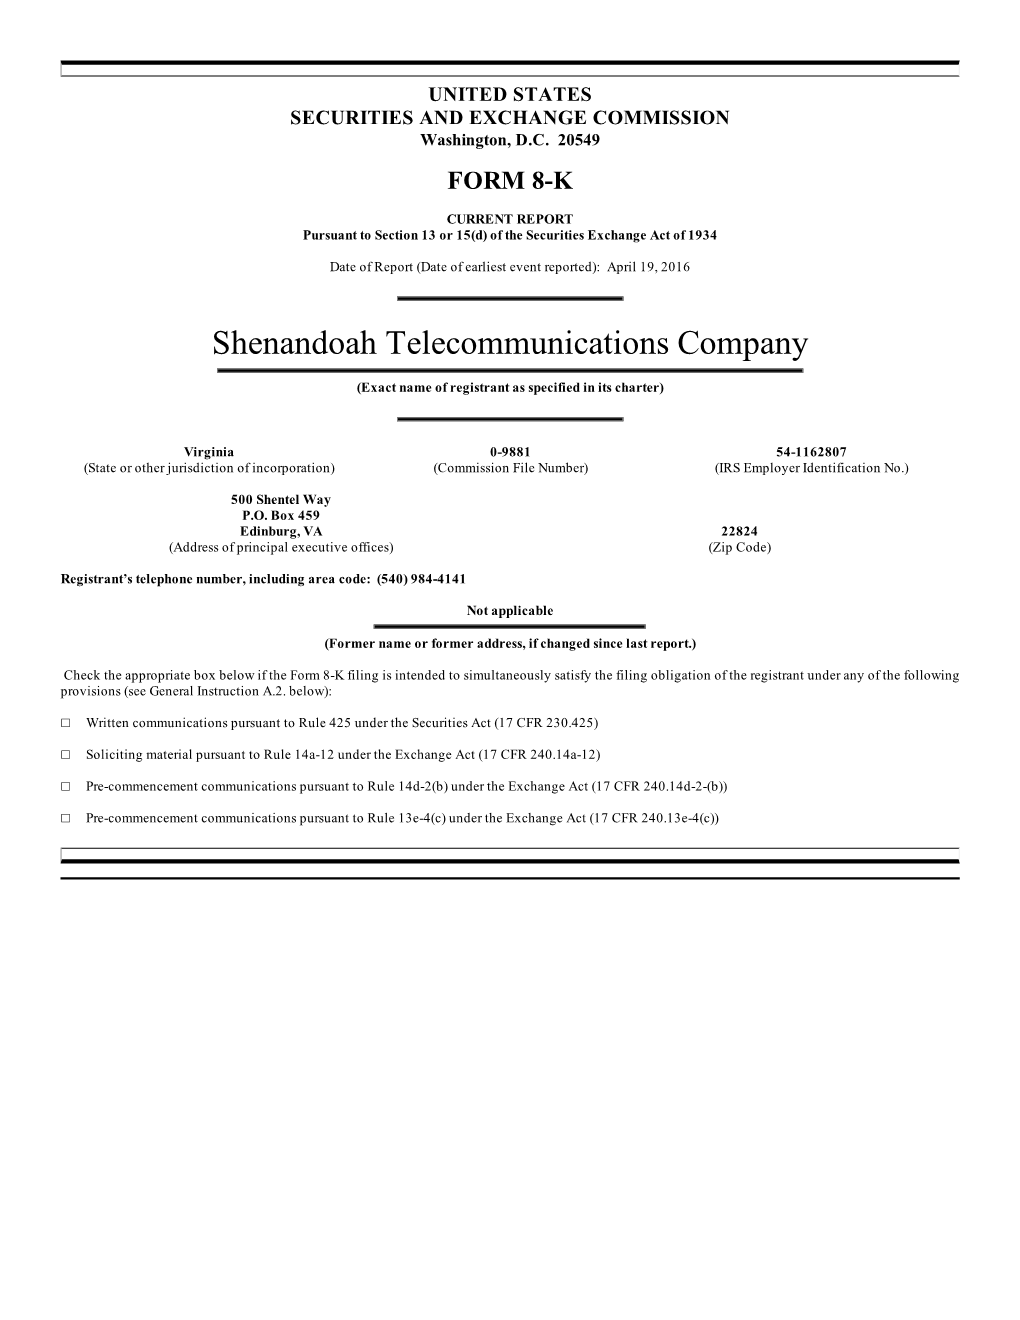 Shenandoah Telecommunications Company